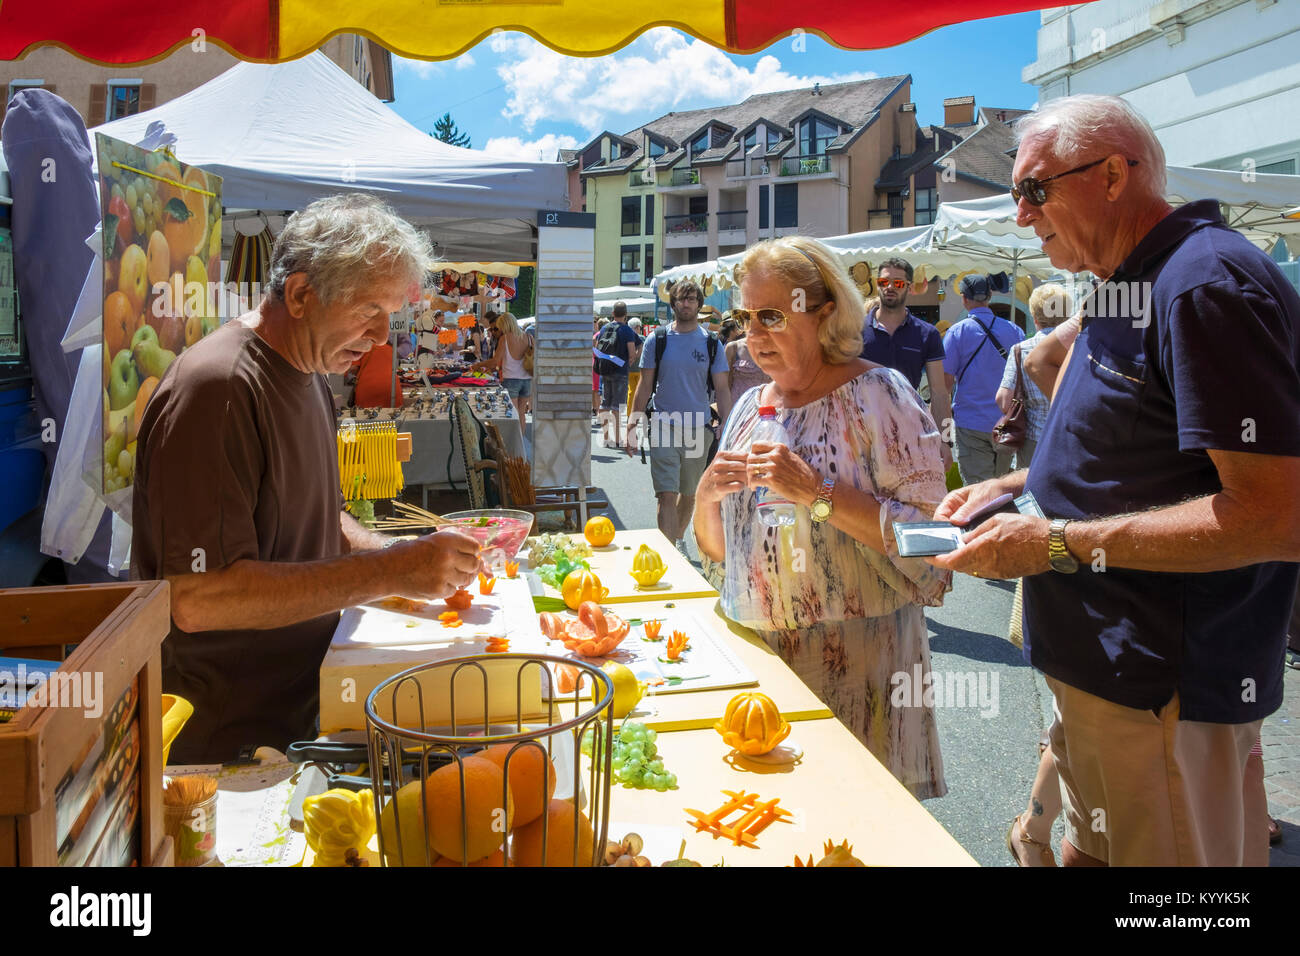 Street market stall à Annecy, Haute Savoie, France, Europe Banque D'Images